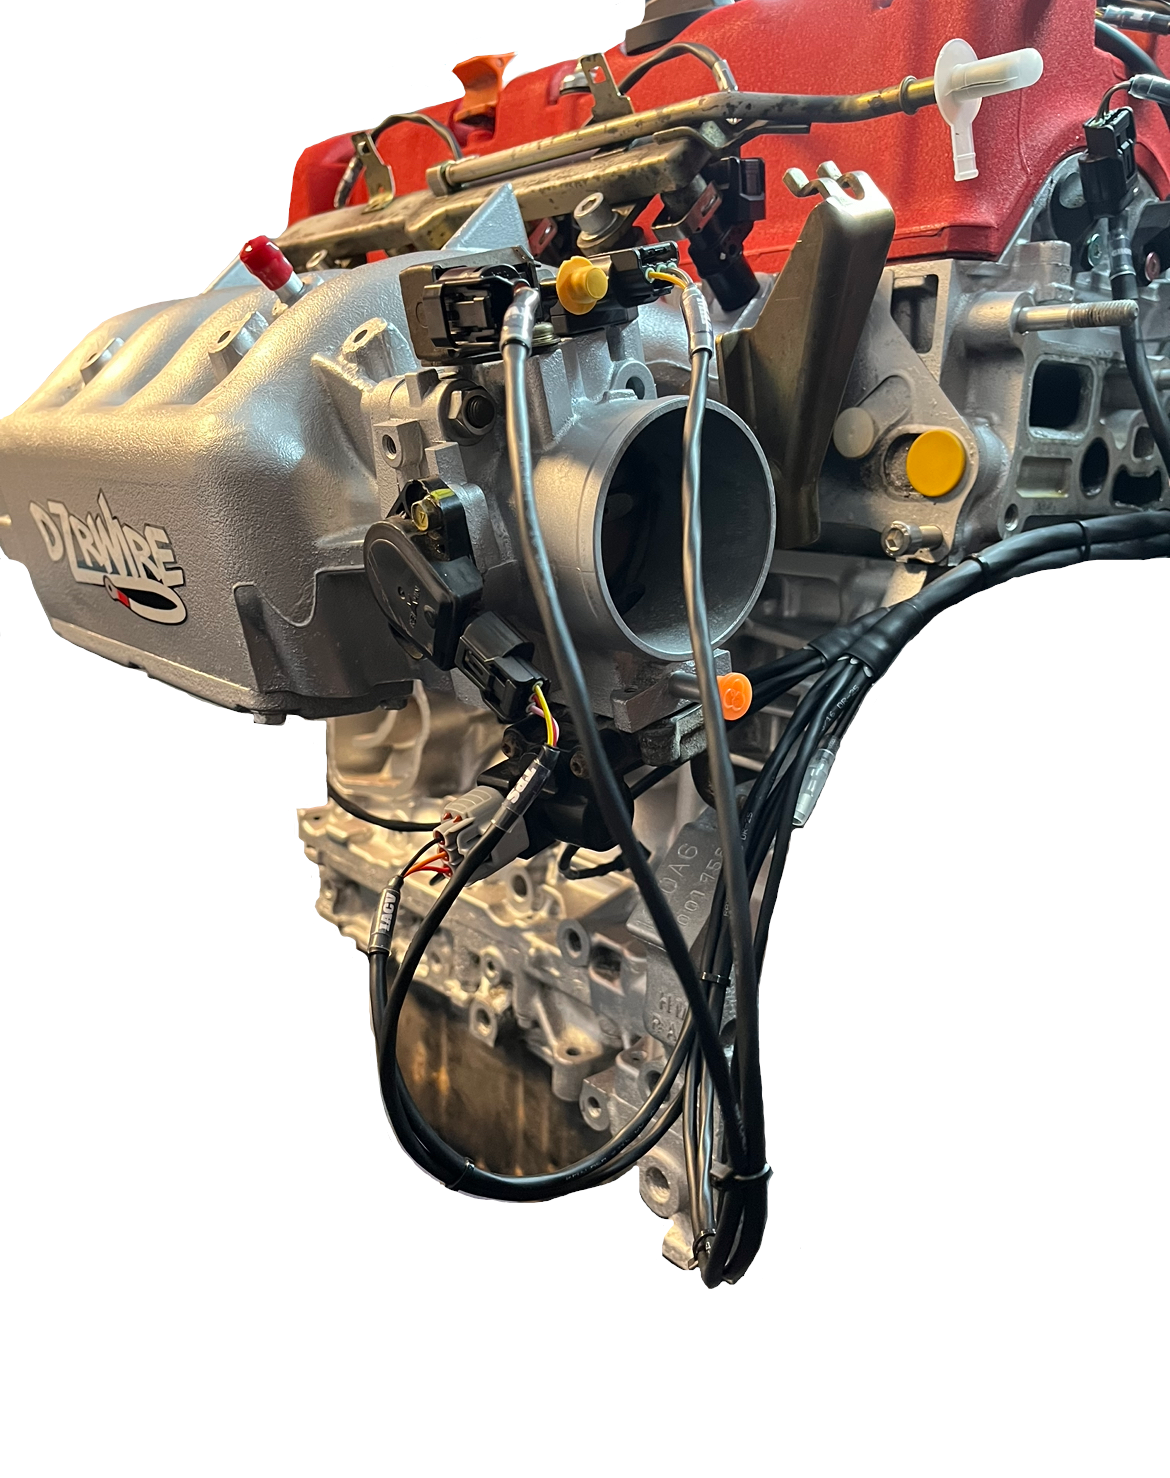 K20a Engine Harness (RHD)